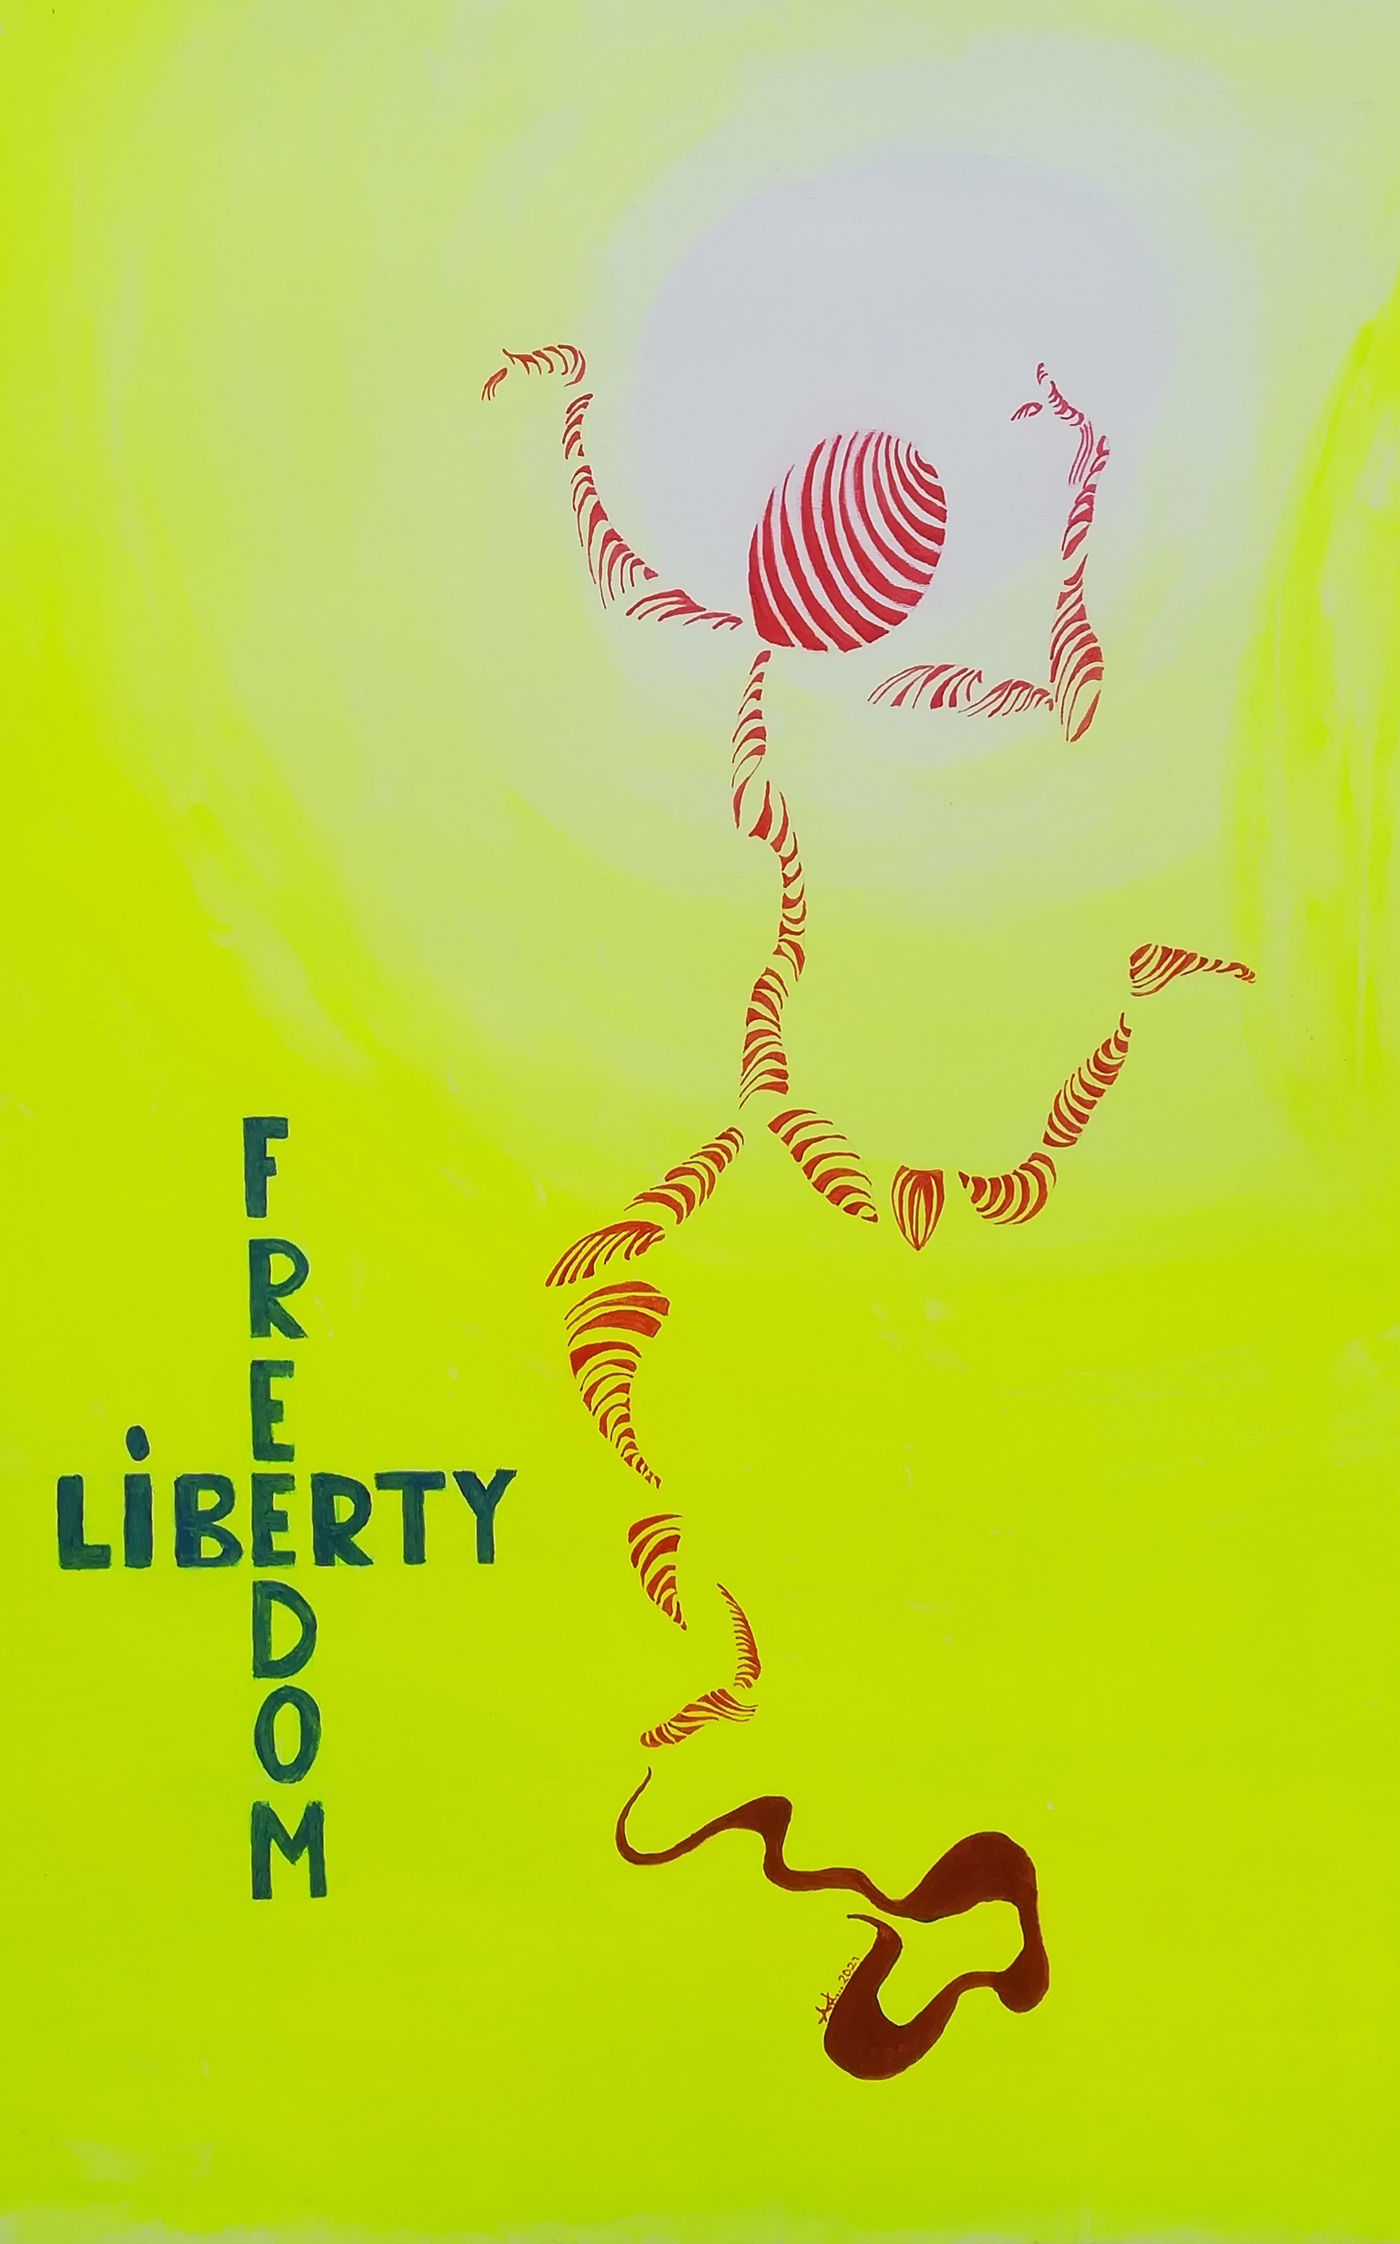 Liberty freedom Primary colors hope life enlightenment Awakening acrilic